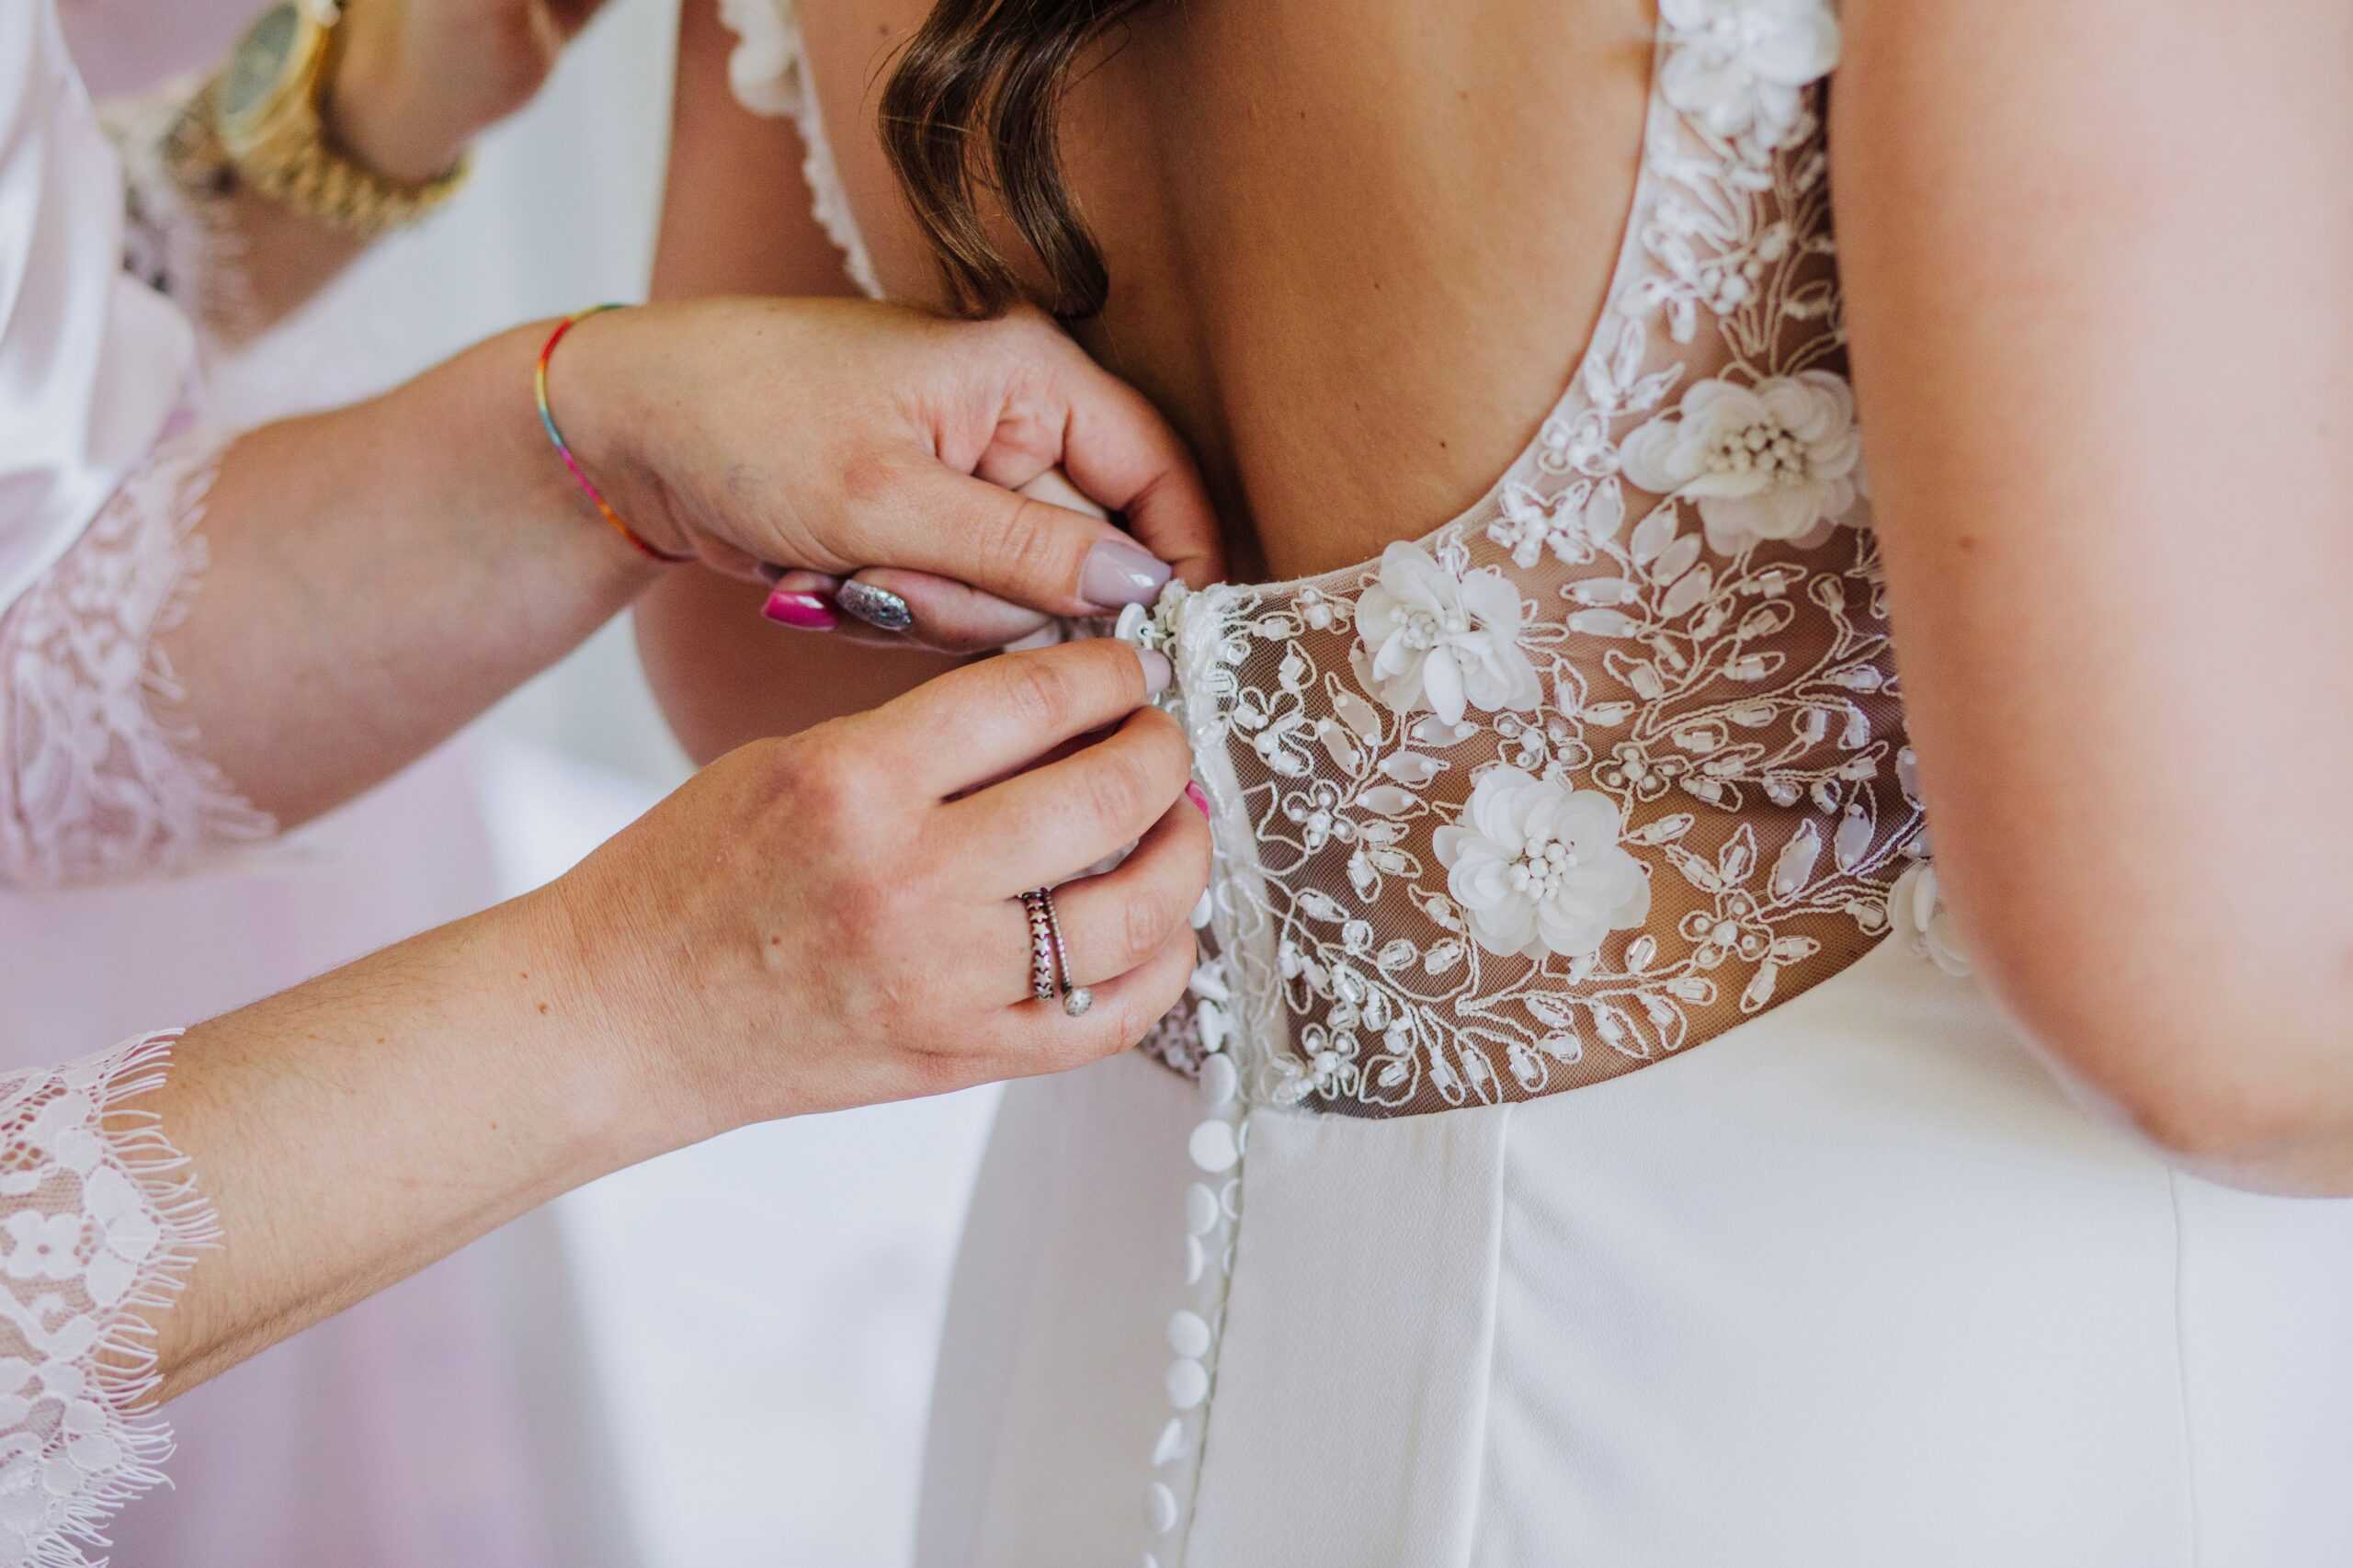 Should you rewear your wedding dress?